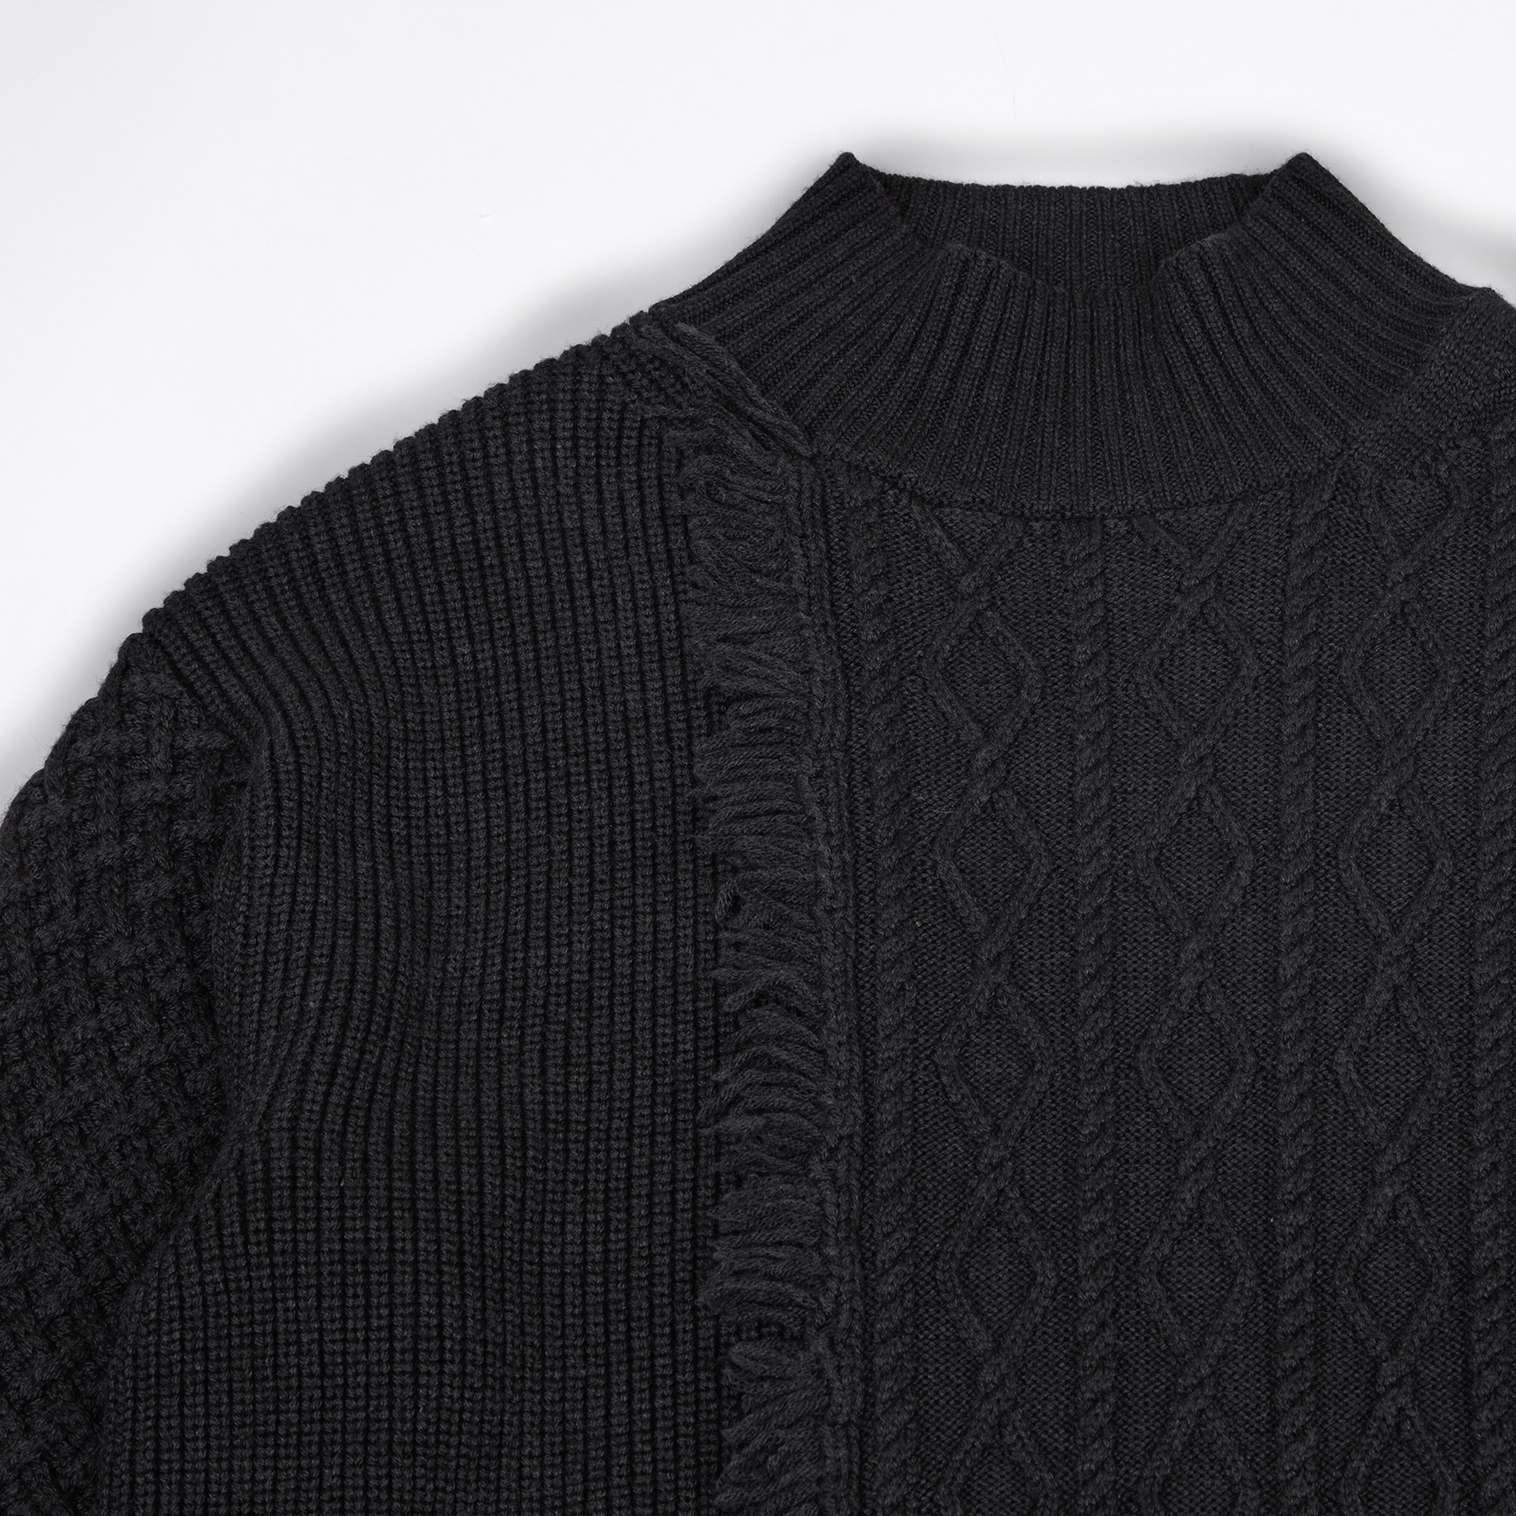 s'yte (Yohji Yamamoto) 2020A/W Multi Pattern Woven Asymmetry Knit Sweater